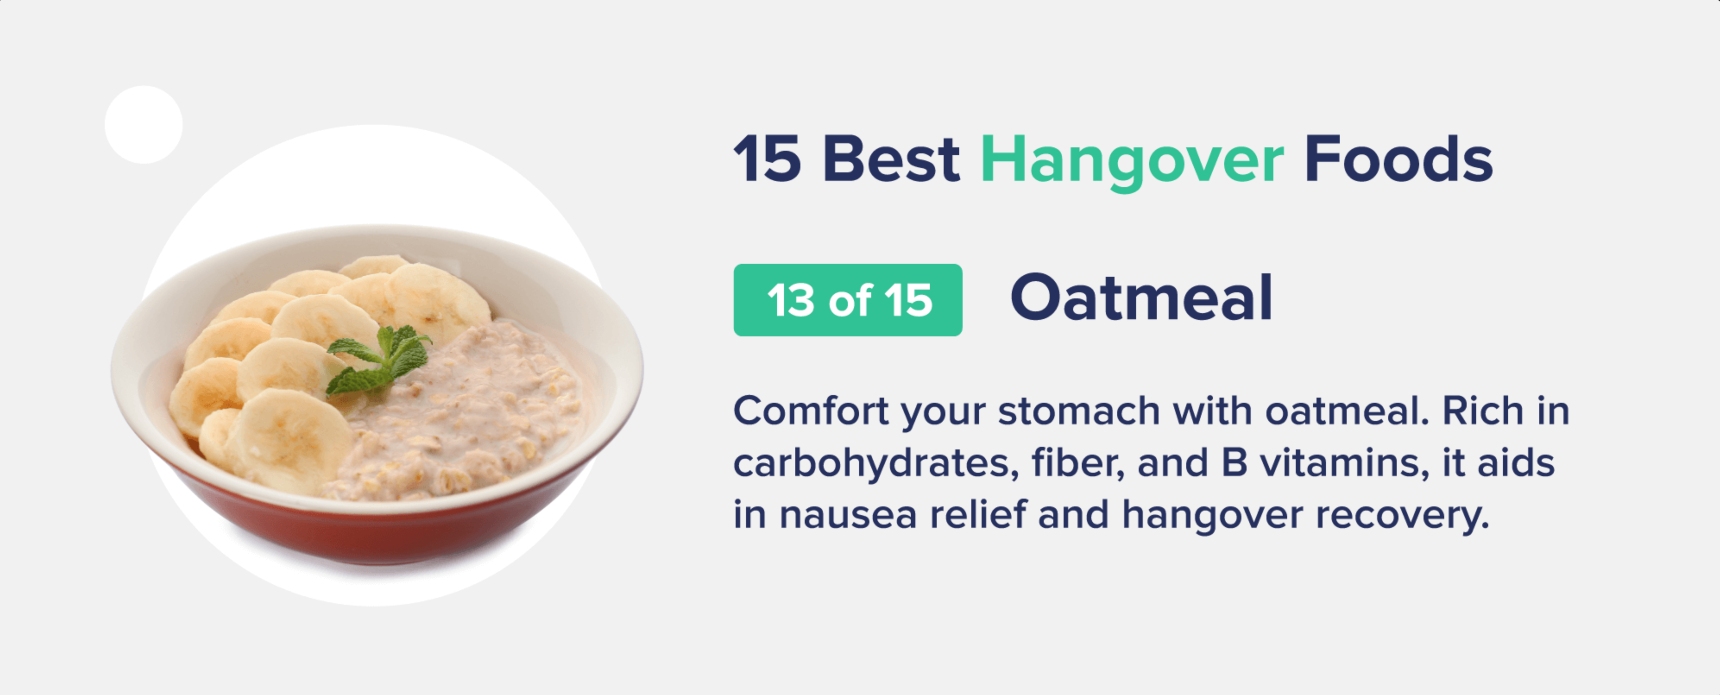 oatmeal best hangover foods